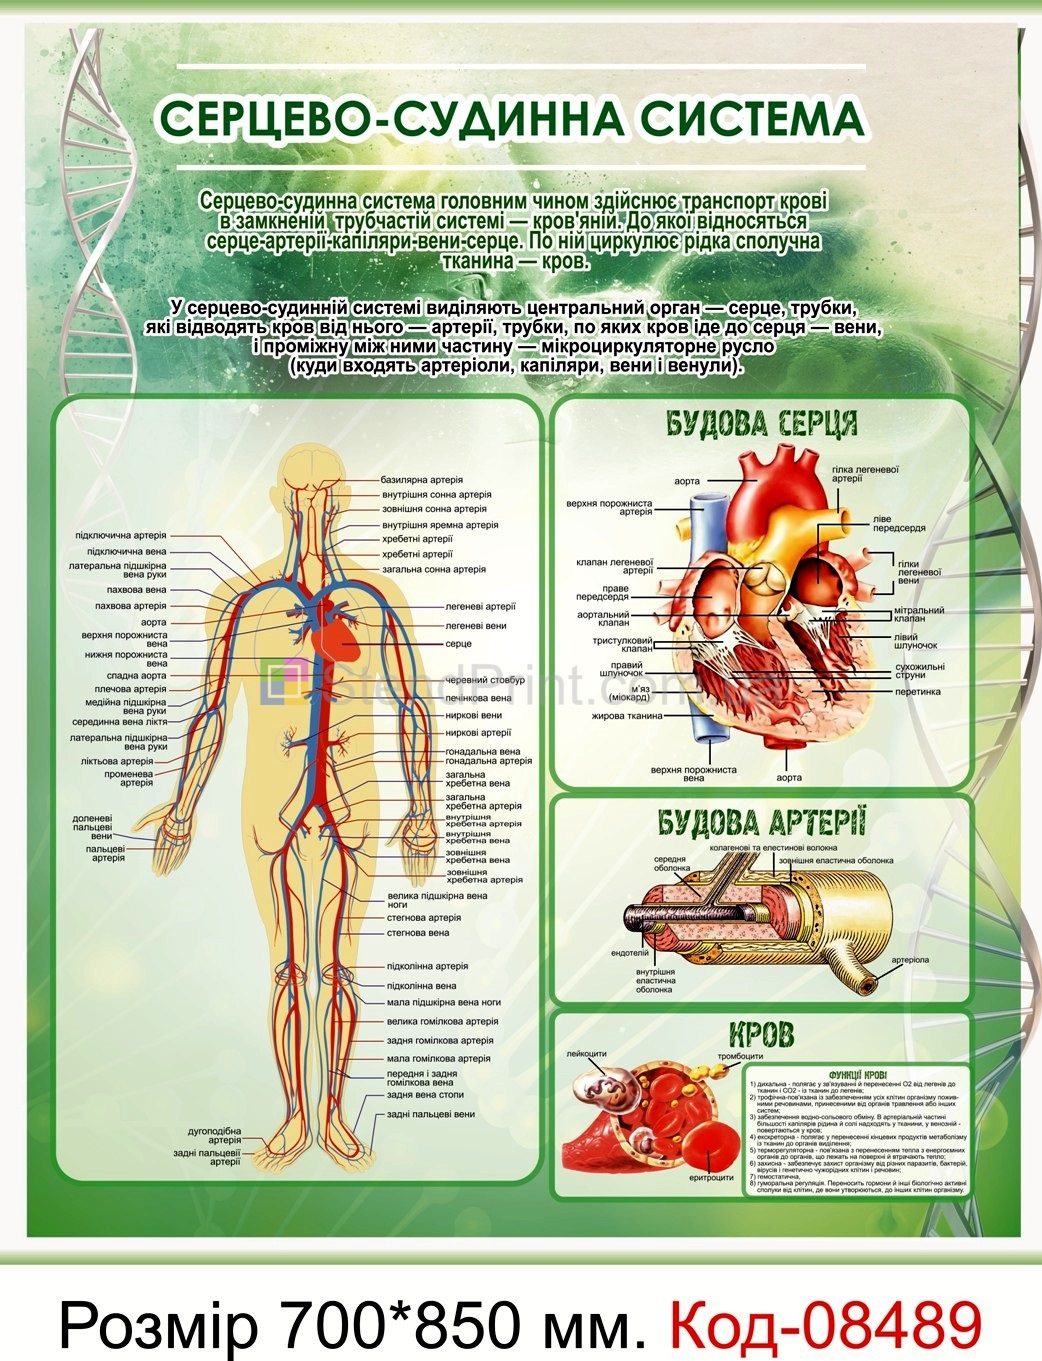 Стенд пластиковий "Серцево-судинна система" В кабінет анатомії людини